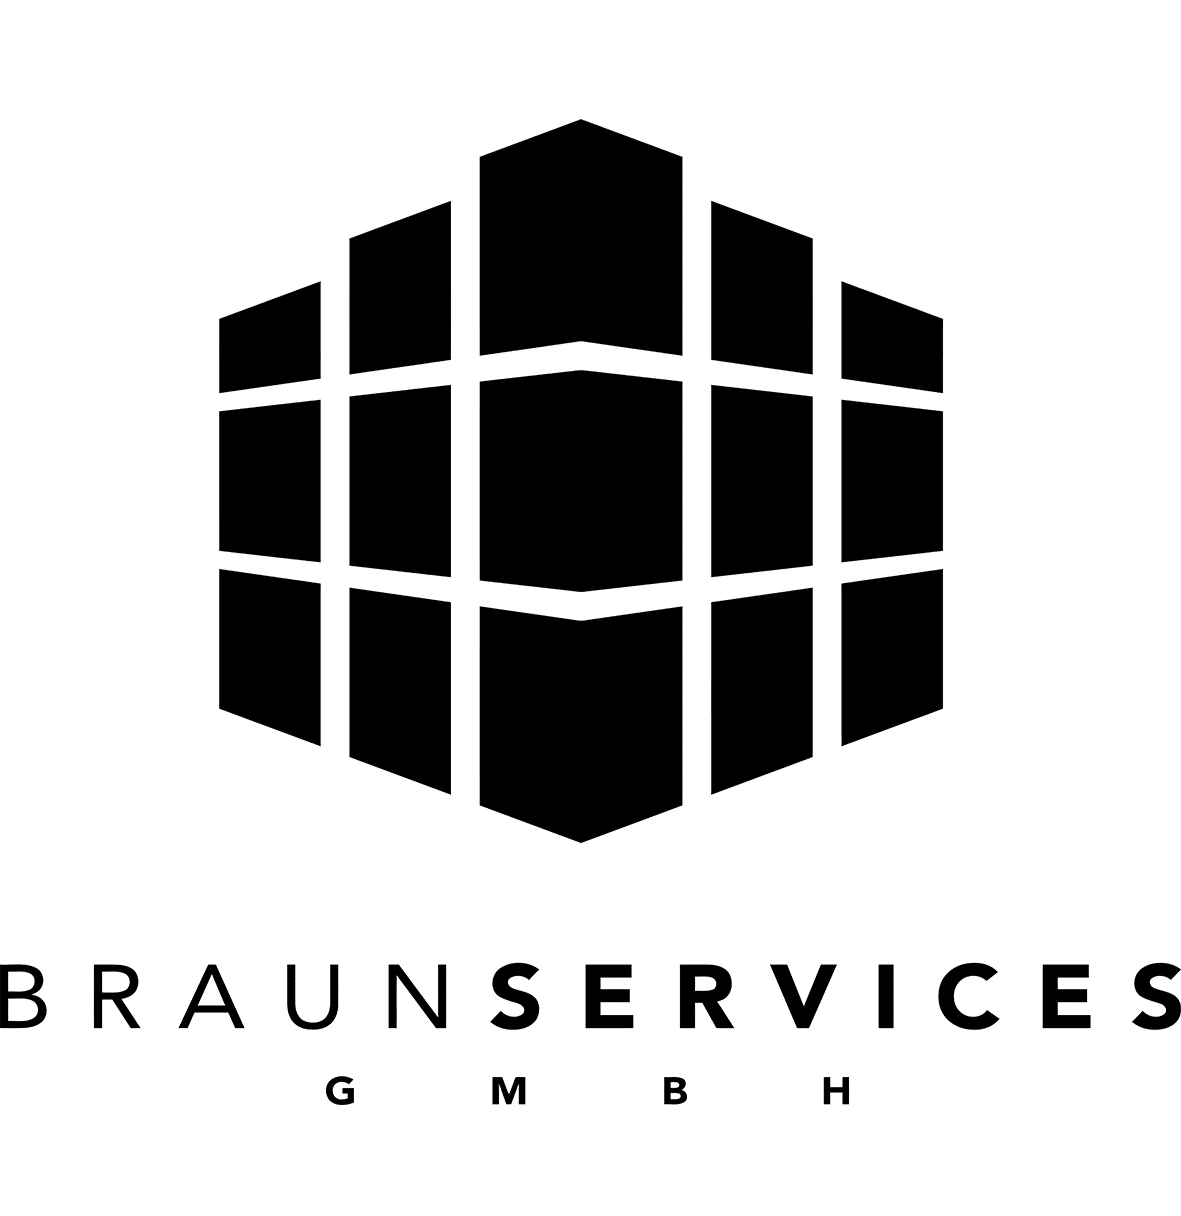 Braun Services GmbH